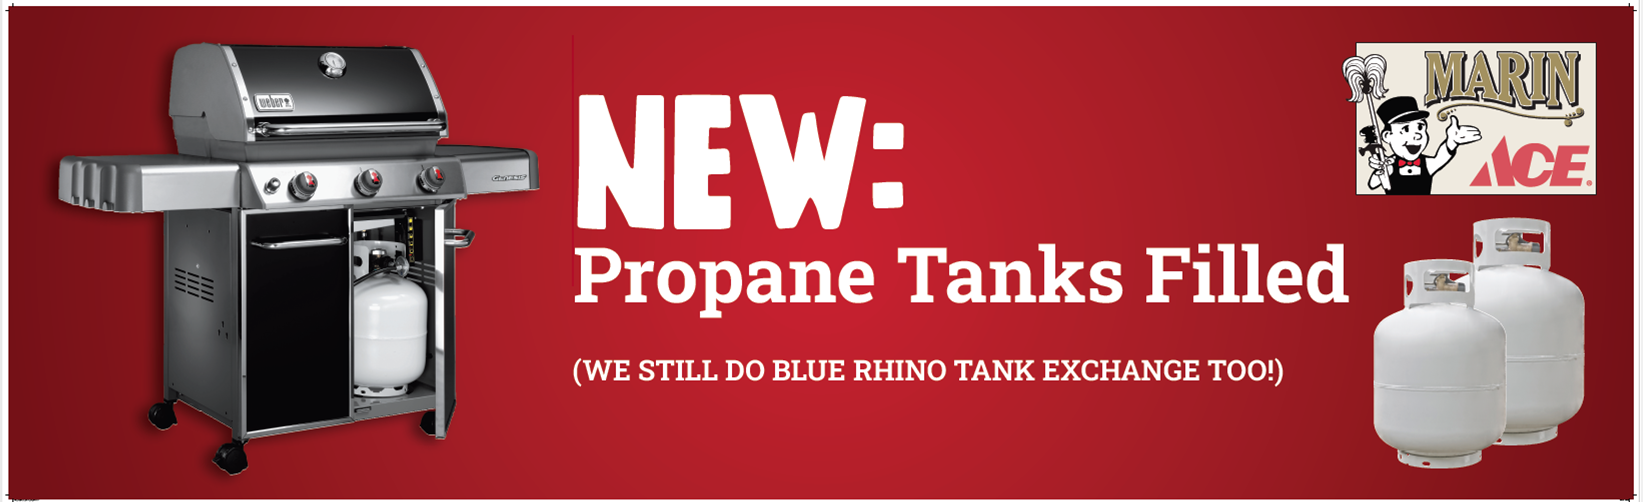 Marin Ace Now Fills Propane Tanks